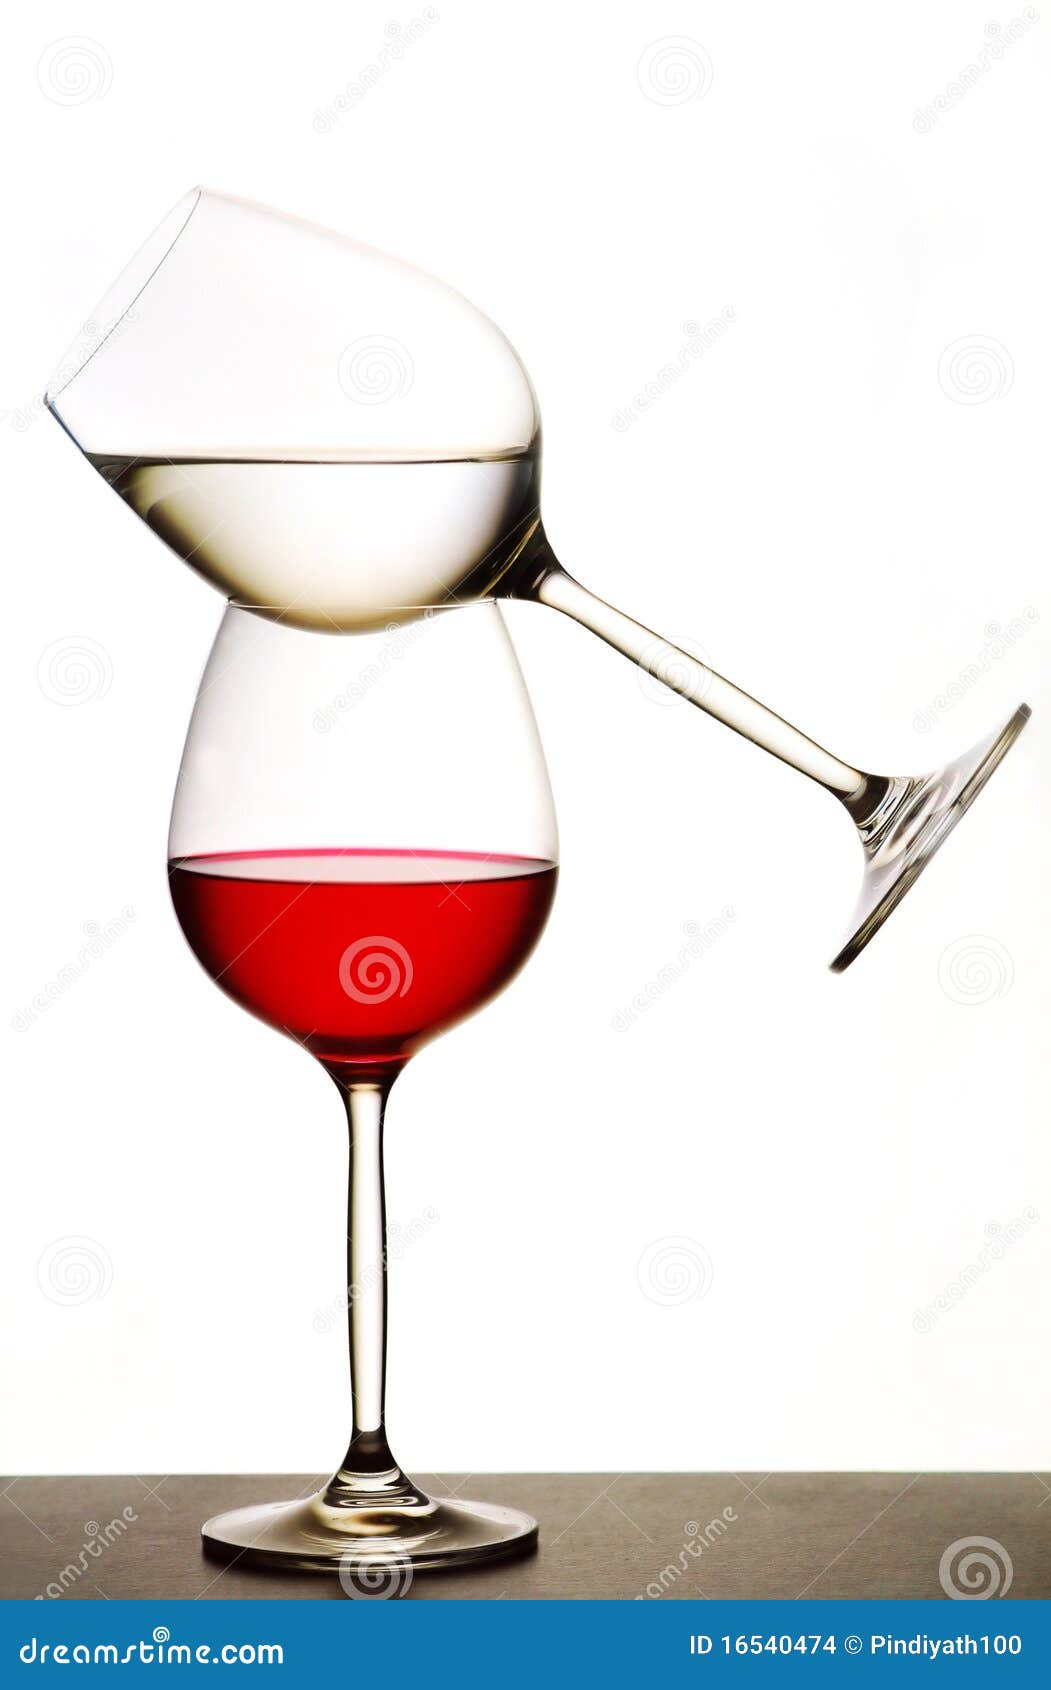 balanced wine glasses